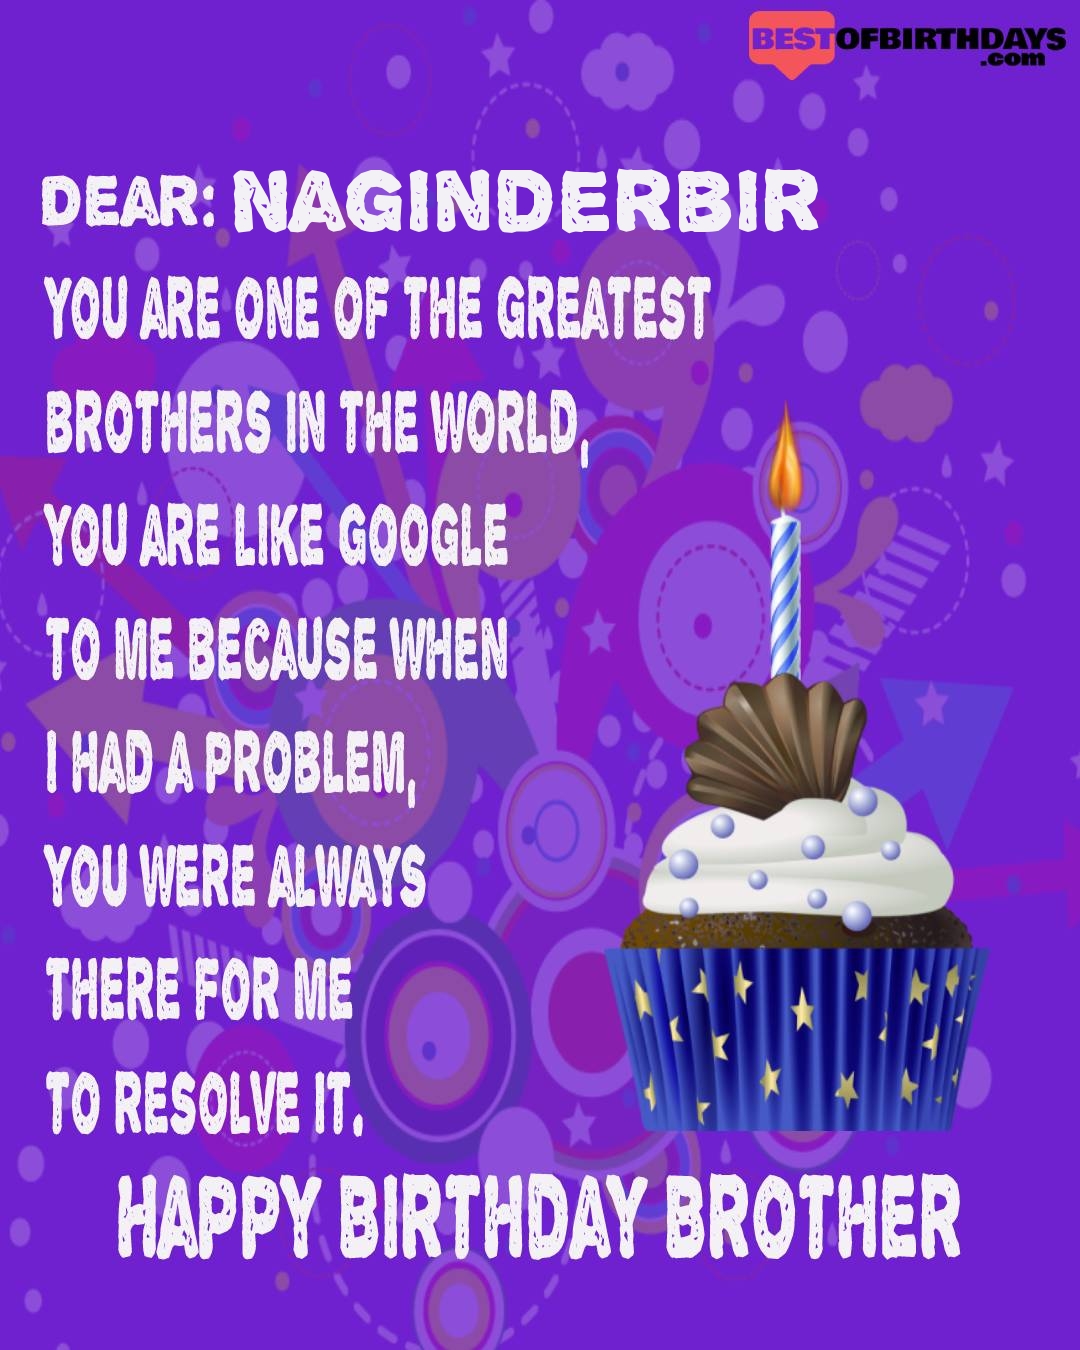 Happy birthday naginderbir bhai brother bro